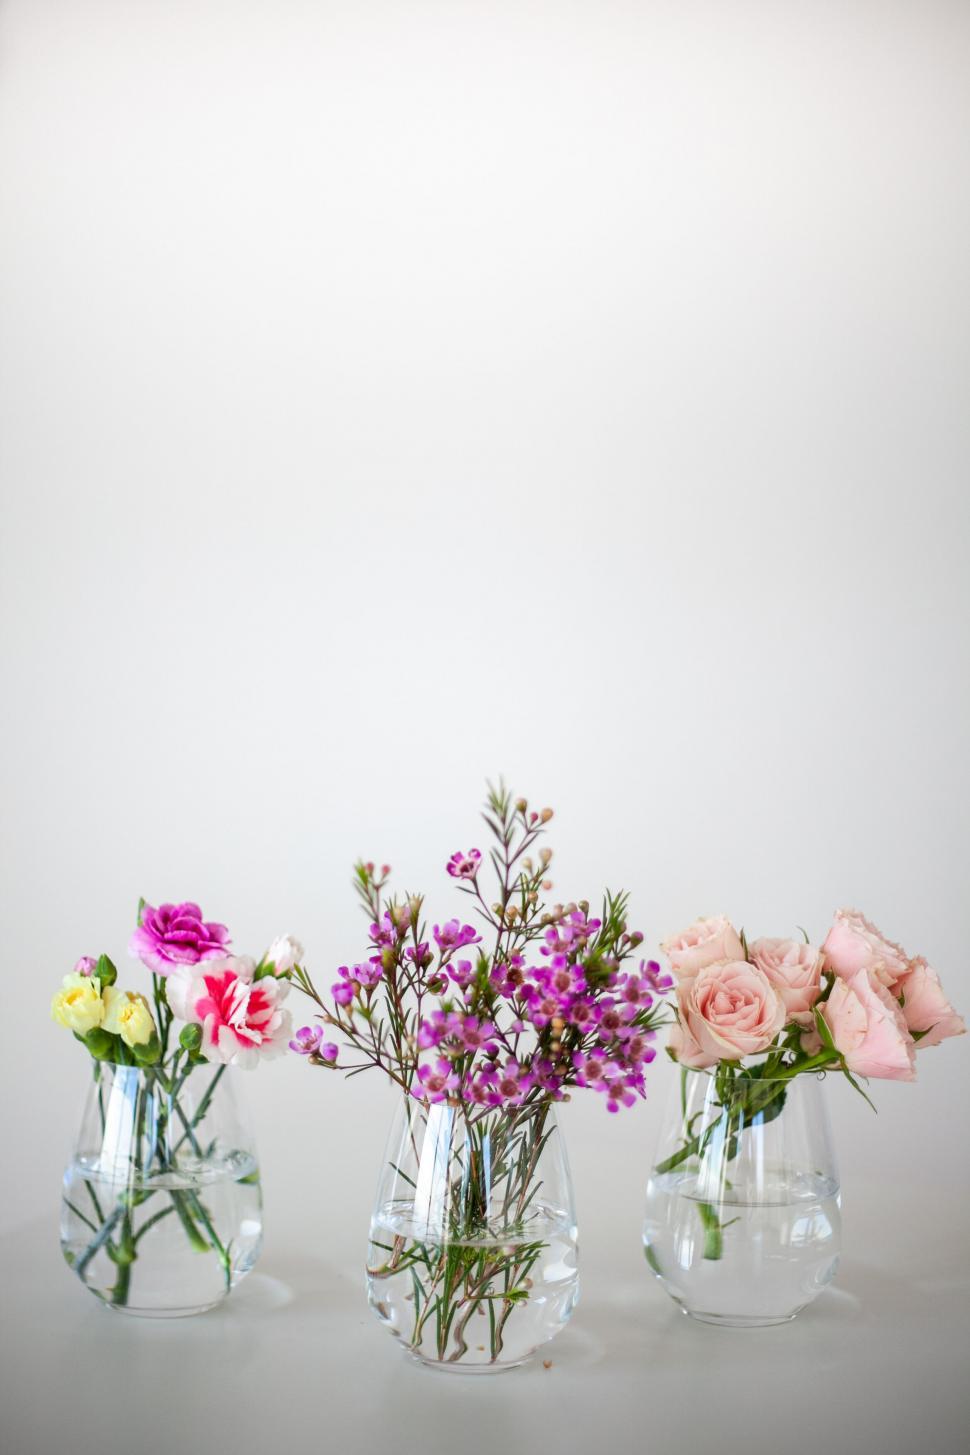 Free Image of Elegant floral arrangement on white background 